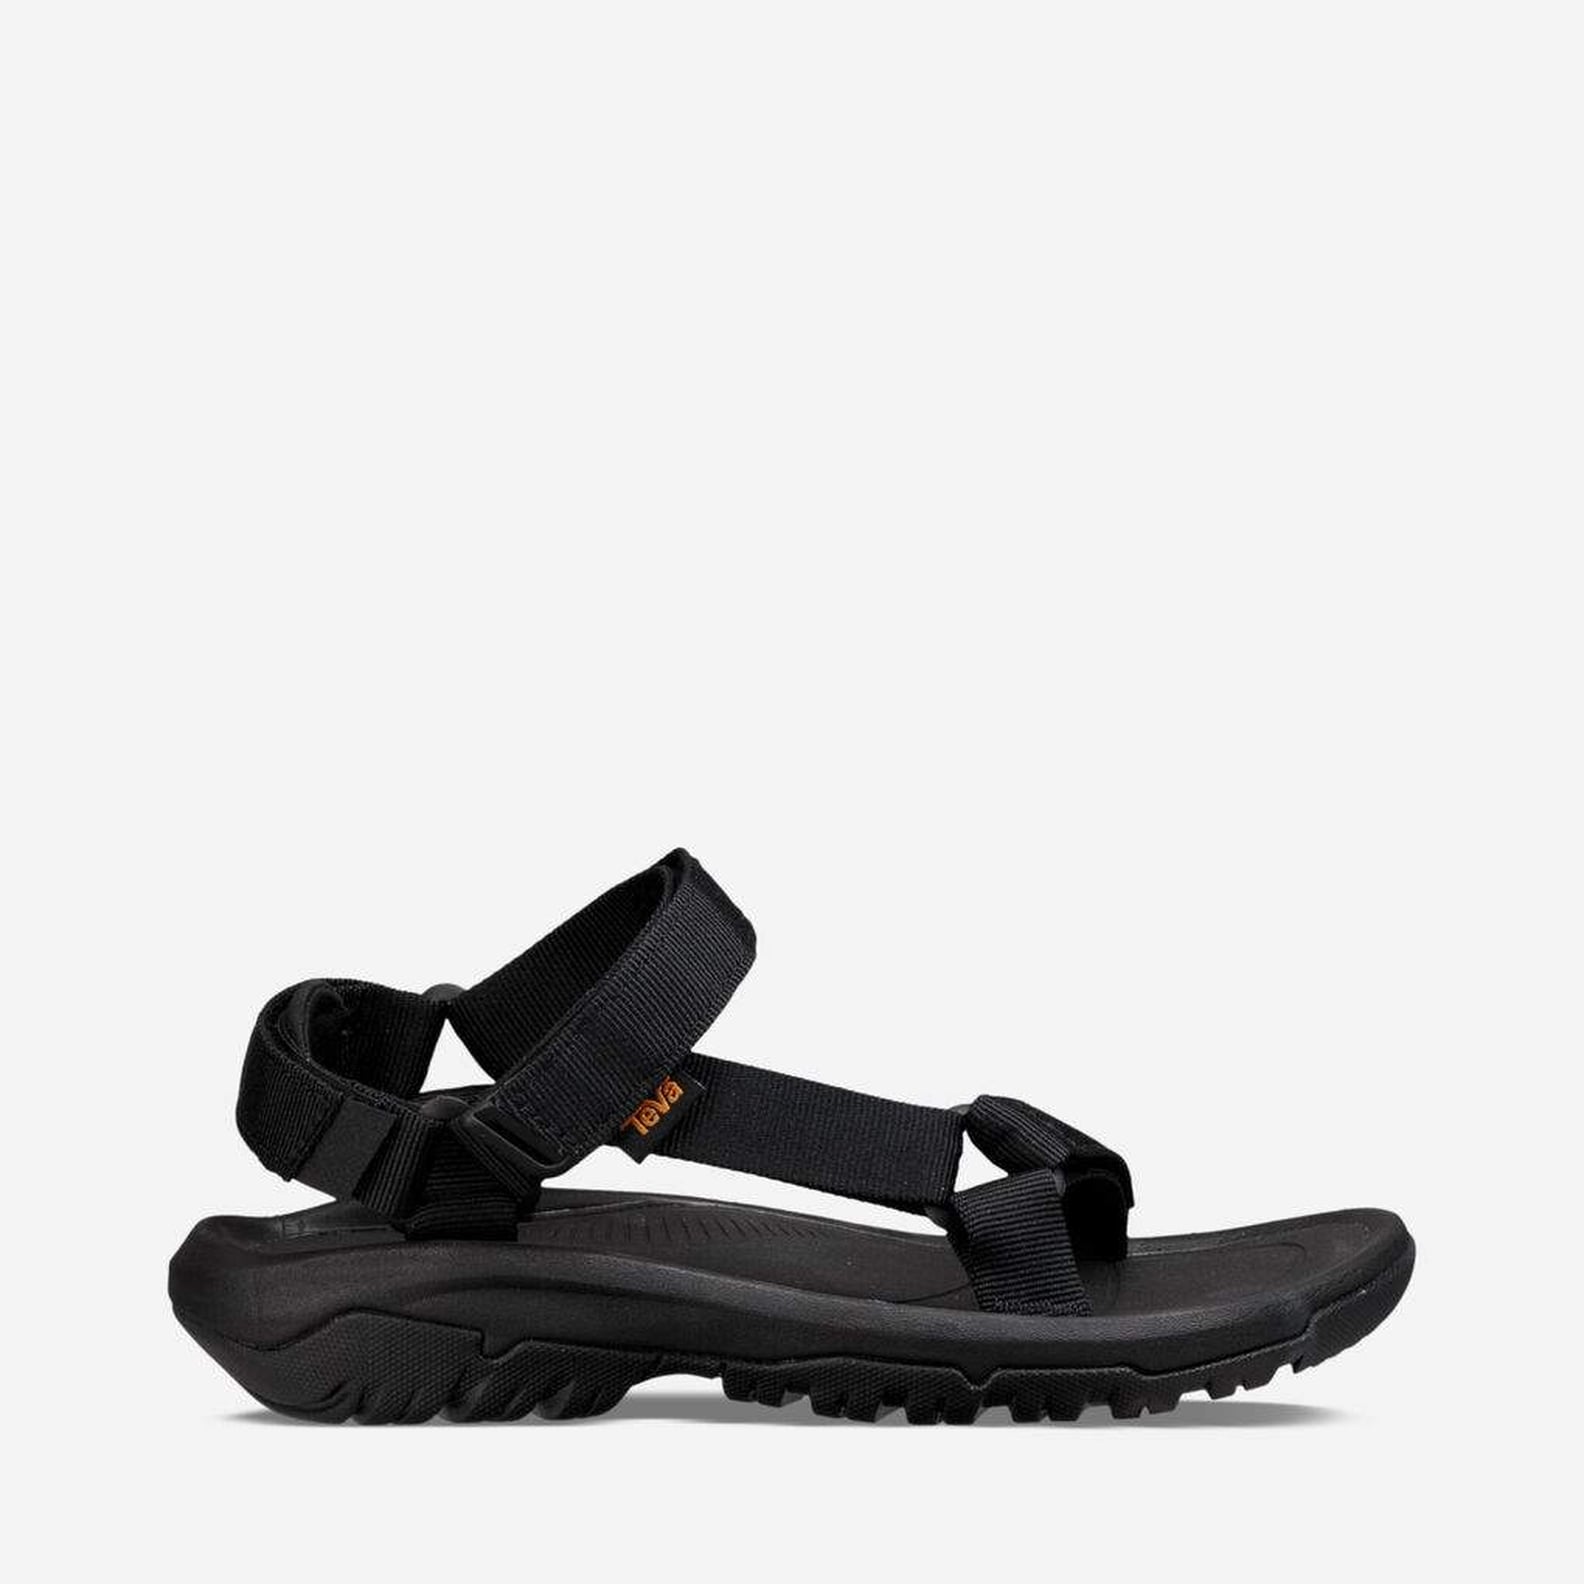 Popular Sandals 2019 | POPSUGAR Fashion